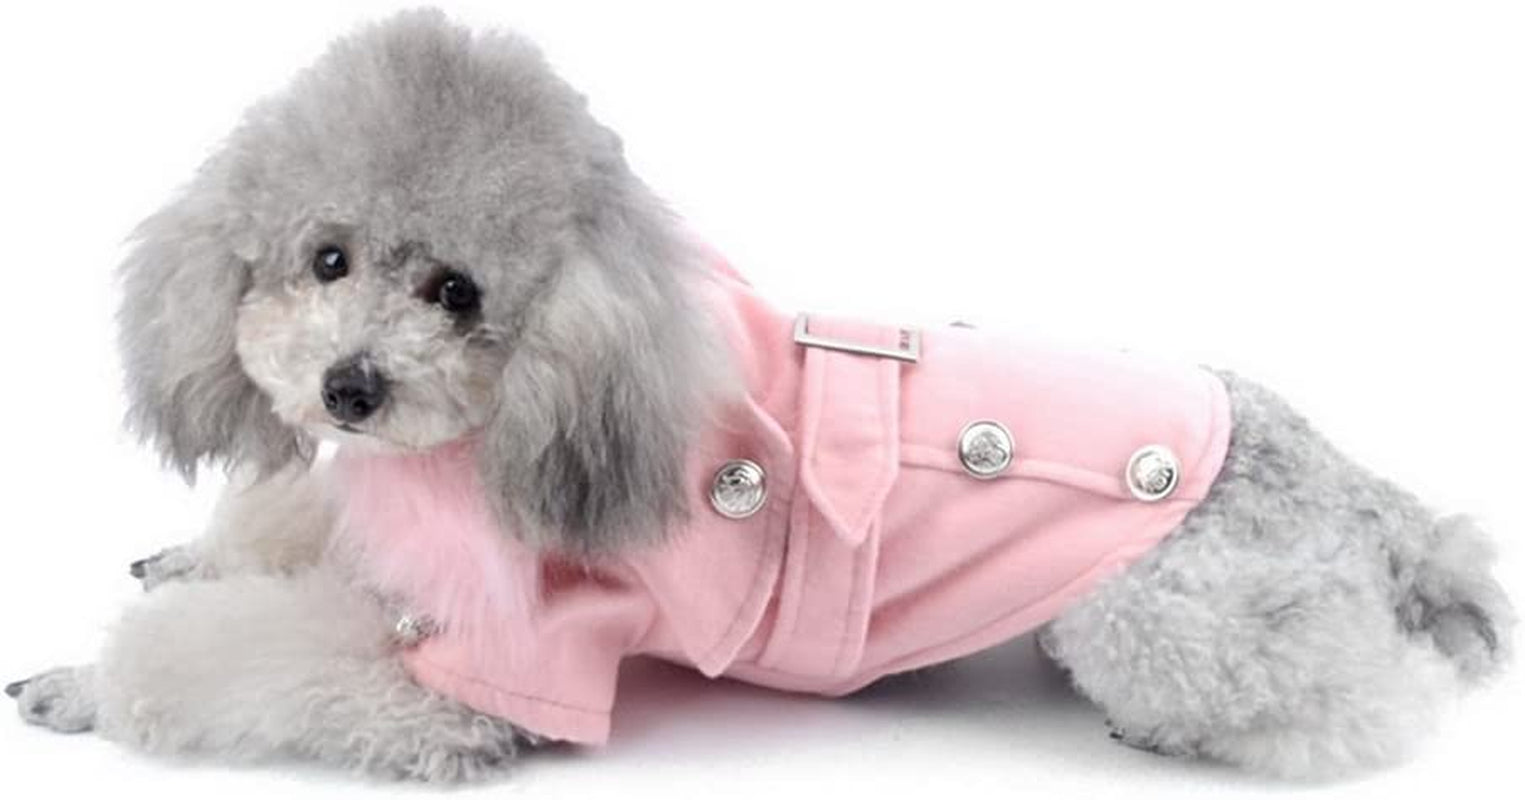 Pet Cat Dog Clothes European Woolen Fur Collar Coat Small Dog Cat Pet Clothes Costume Pink M Animals & Pet Supplies > Pet Supplies > Dog Supplies > Dog Apparel SMALLLEE_LUCKY_STORE   